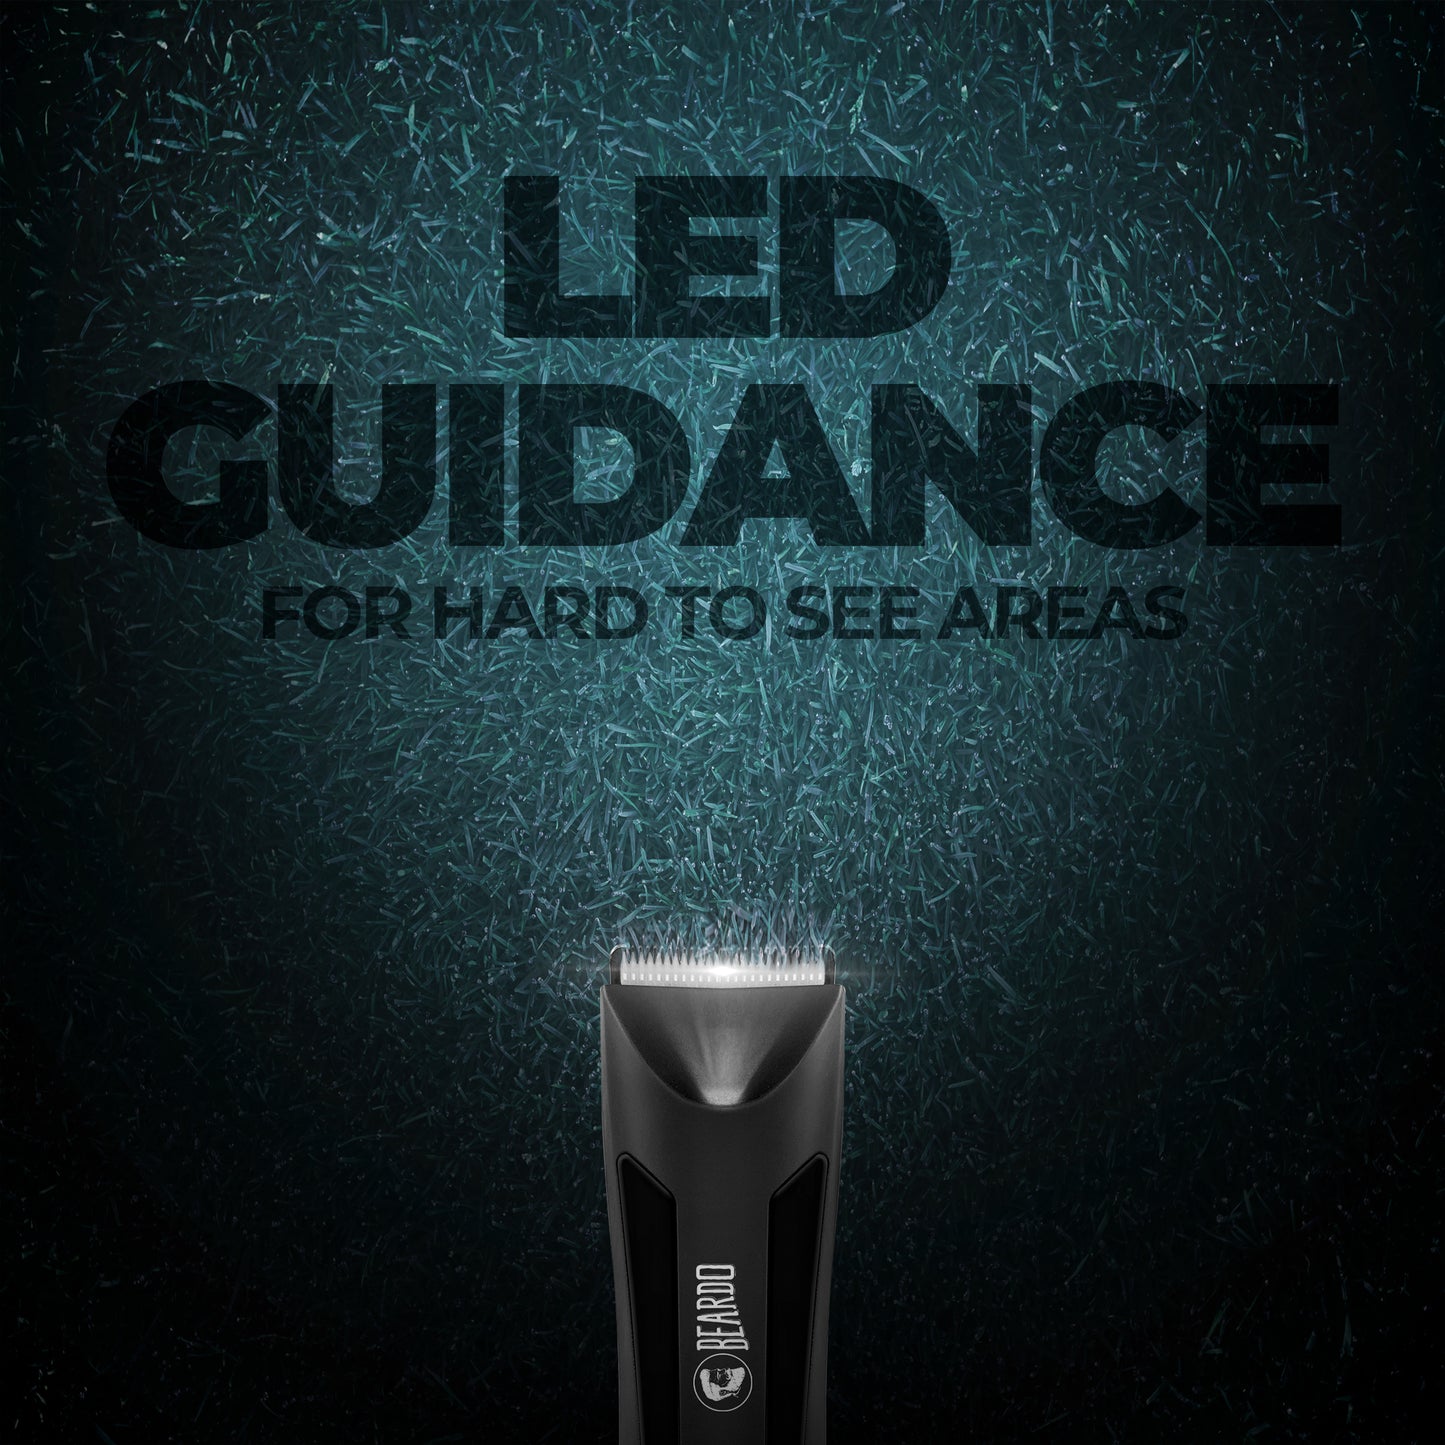 LED guidance